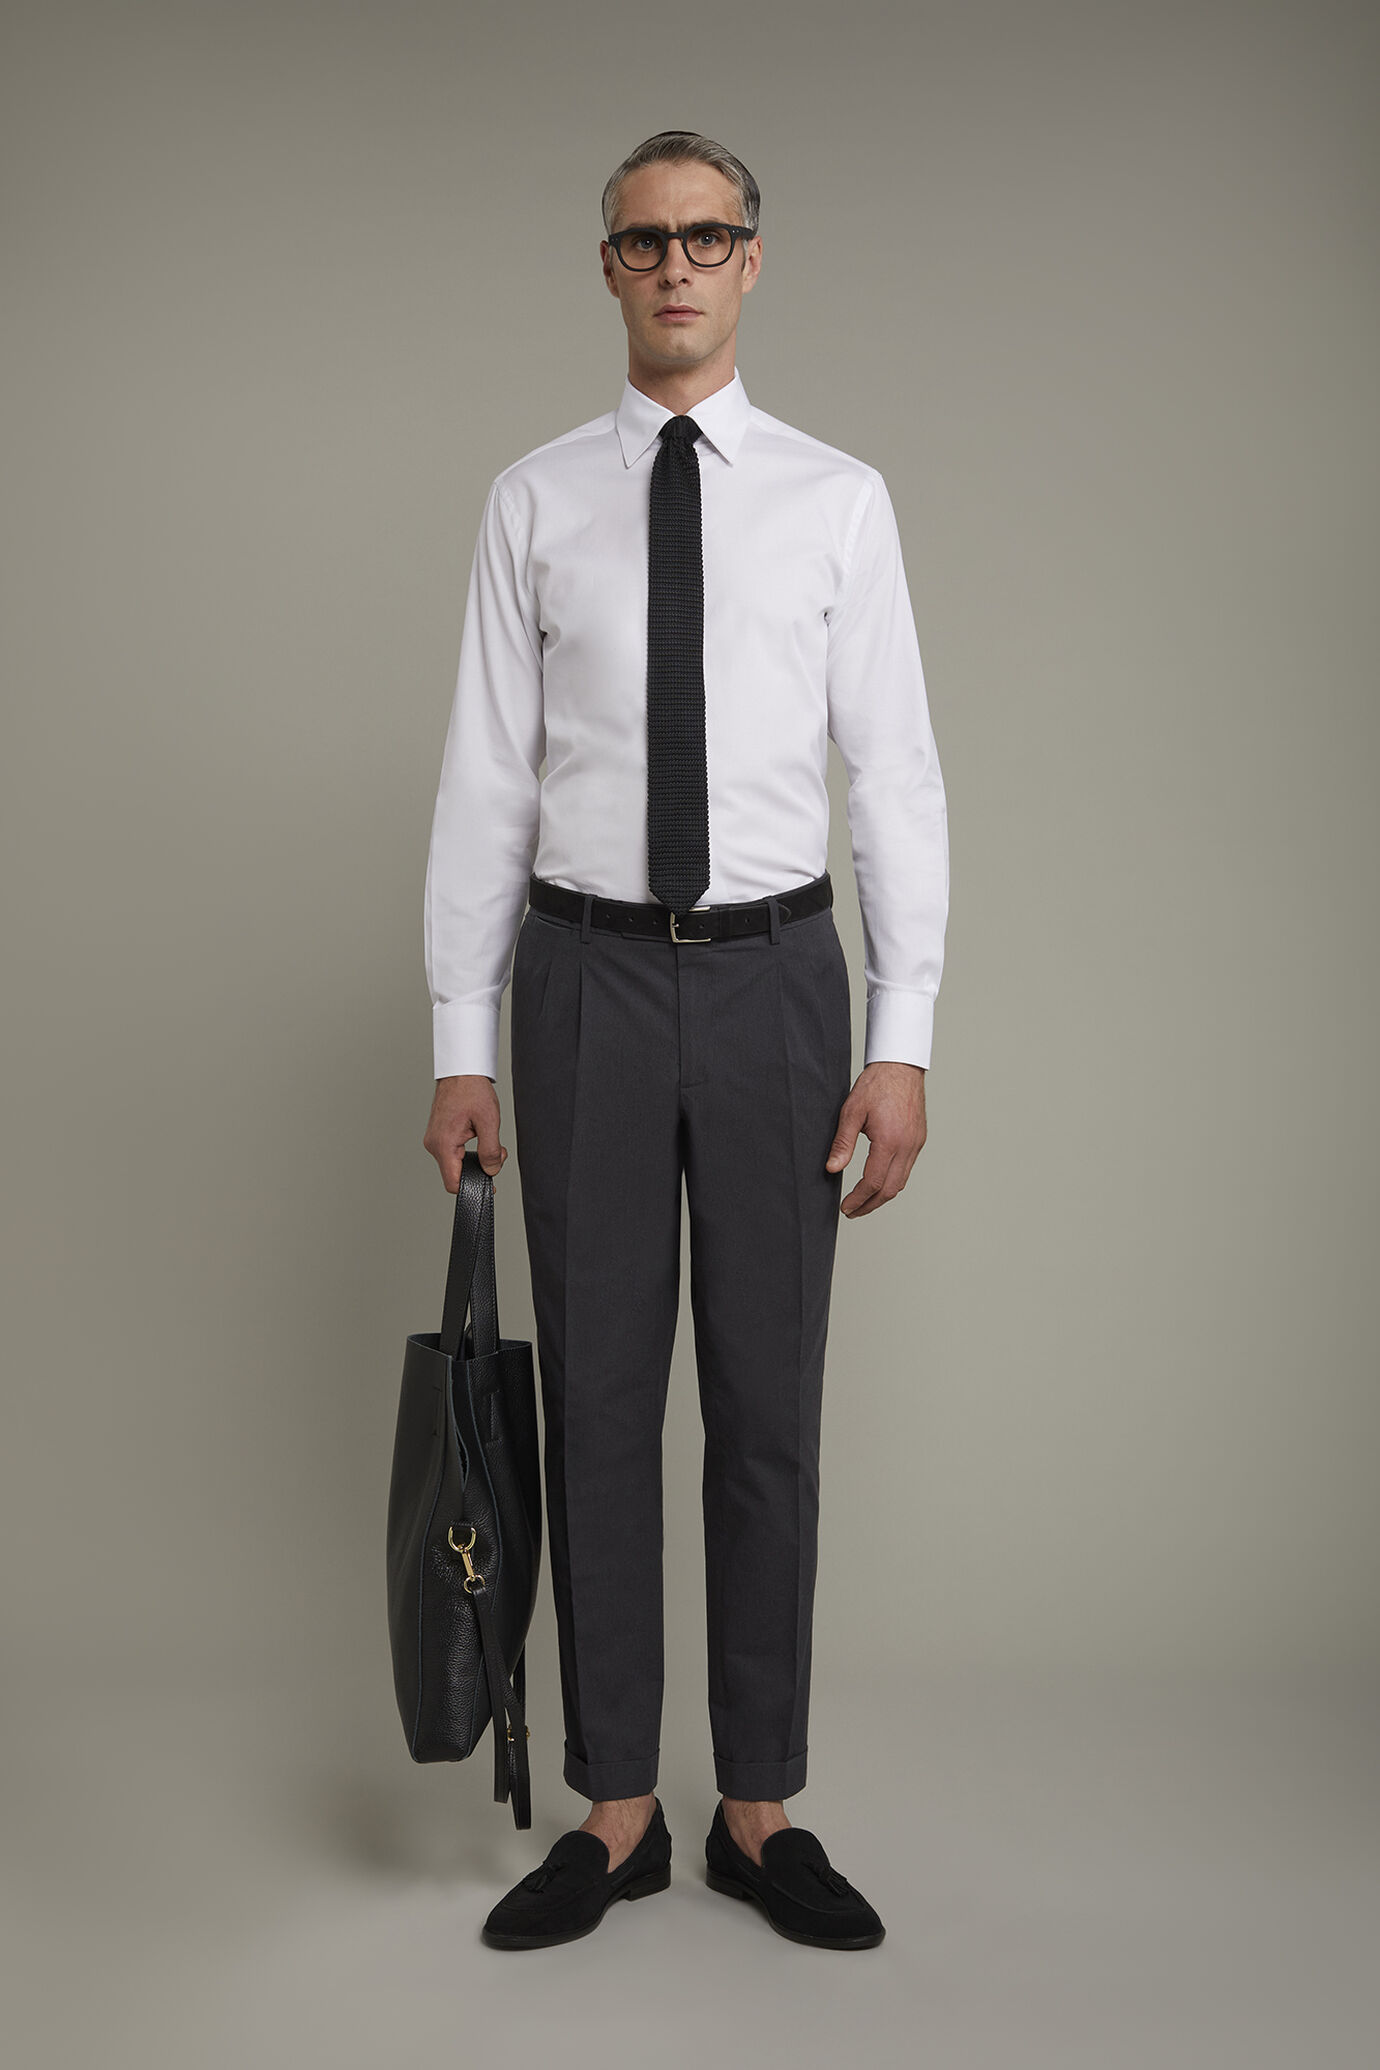 Men's shirt classic collar 100% cotton plain fabric regular fit